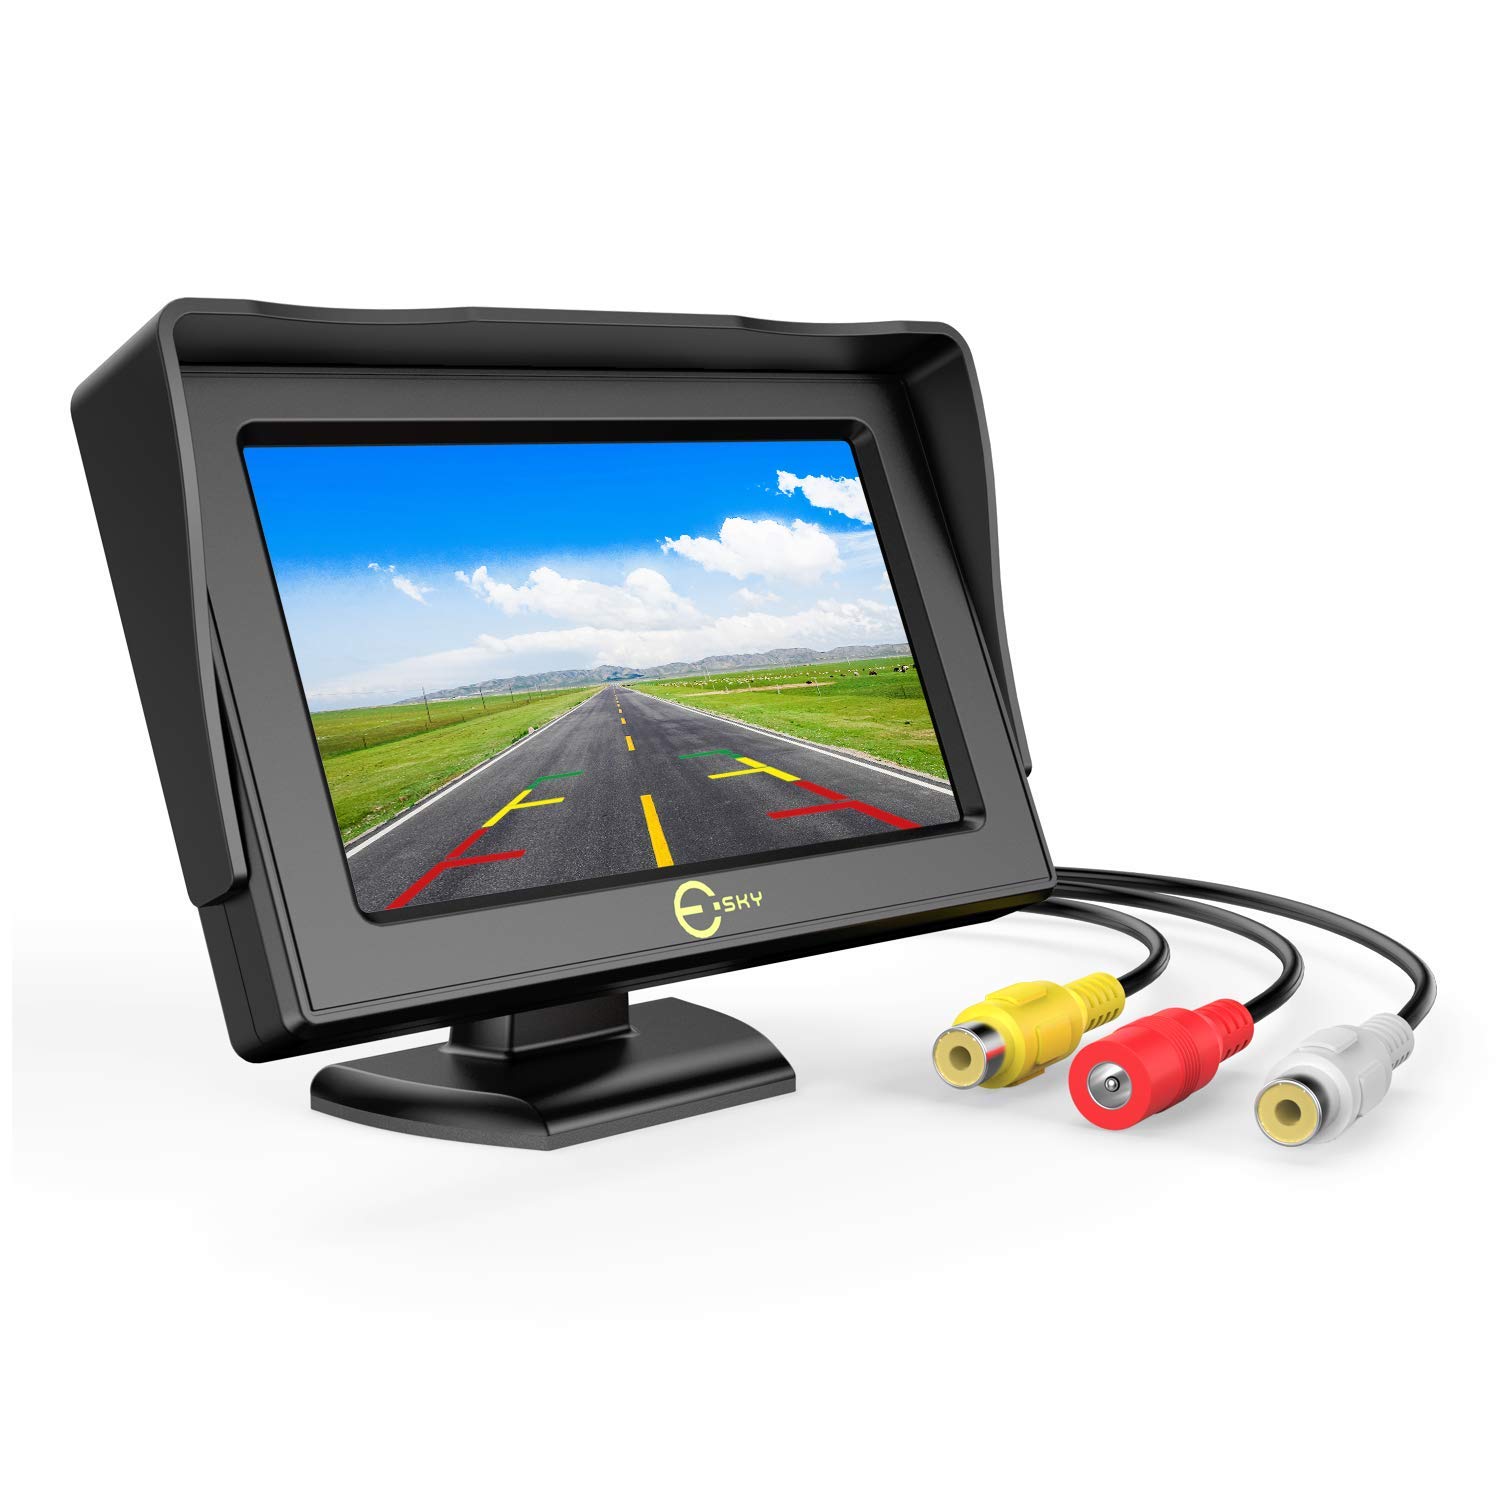 5" HD Car LCD Dash Monitor Rear View Backup Display for Parking Camera Universal 